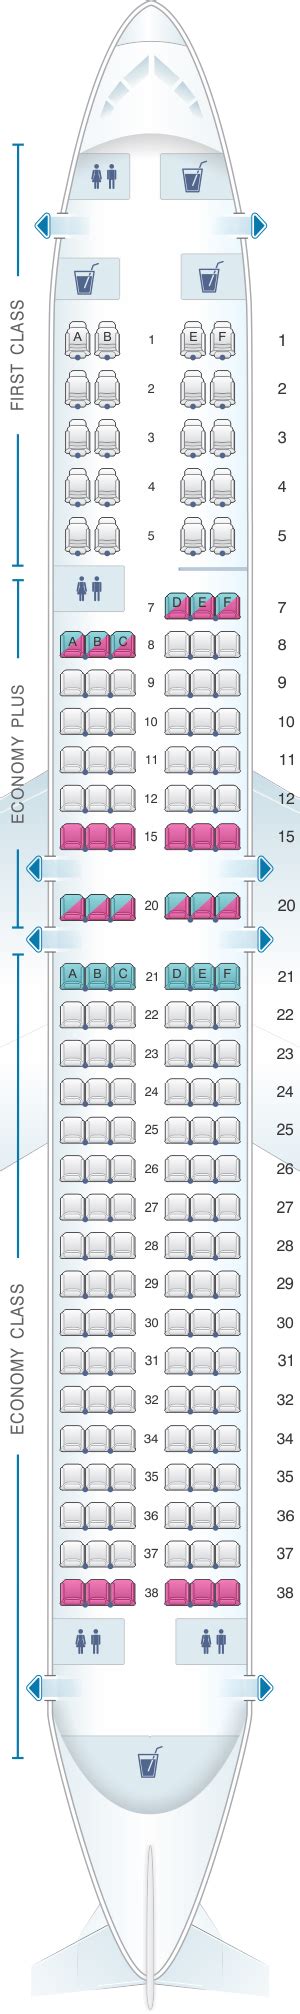 Seat Map United Airlines Boeing B737 900 Version 1 Seatmaestro